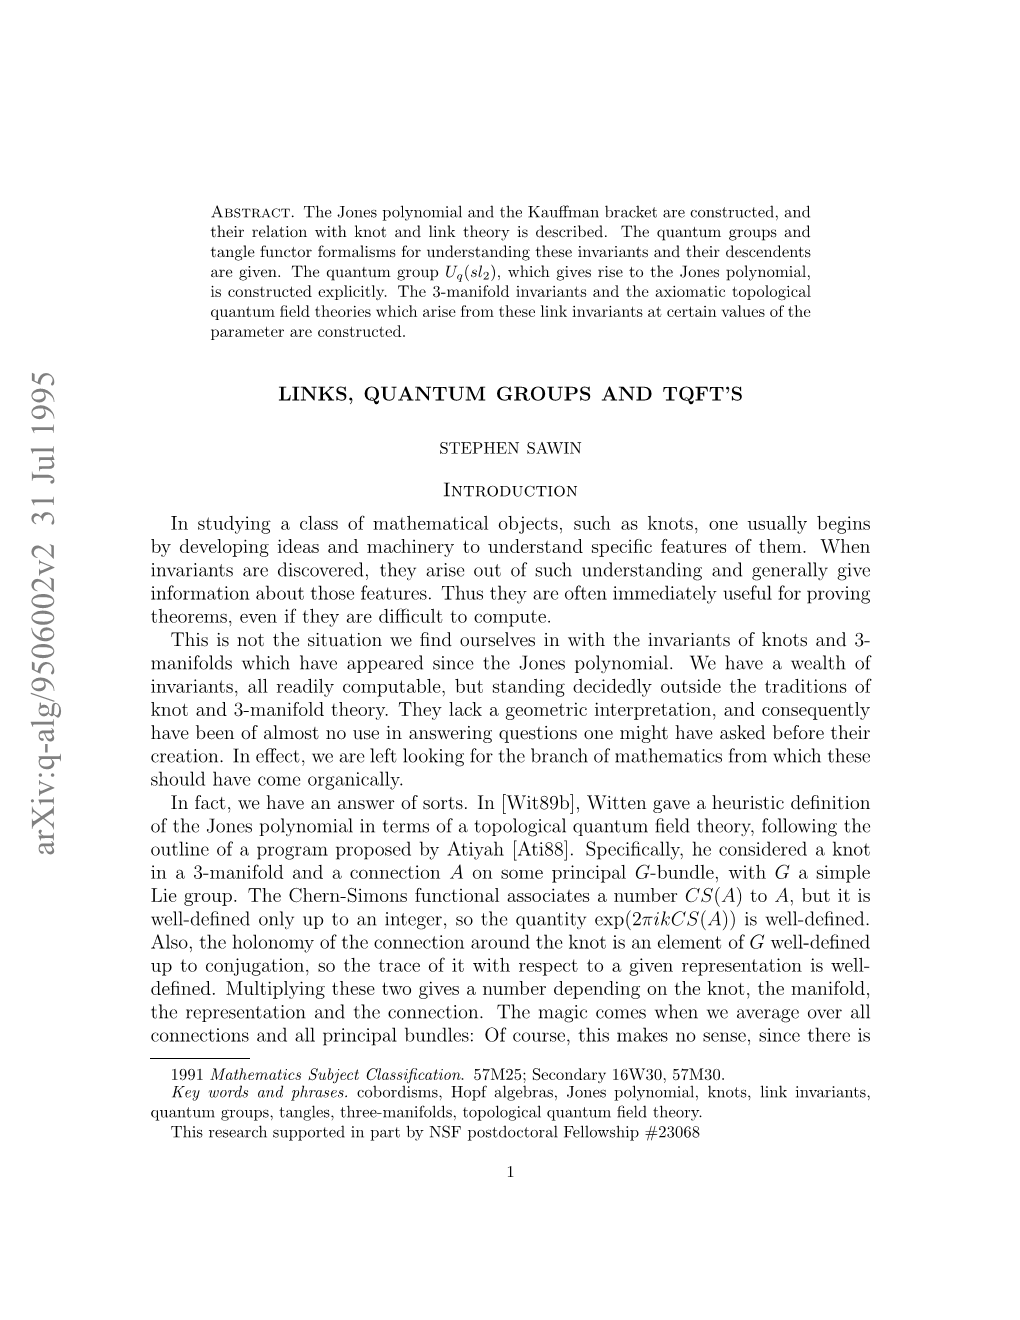 Links, Quantum Groups, and TQFT's